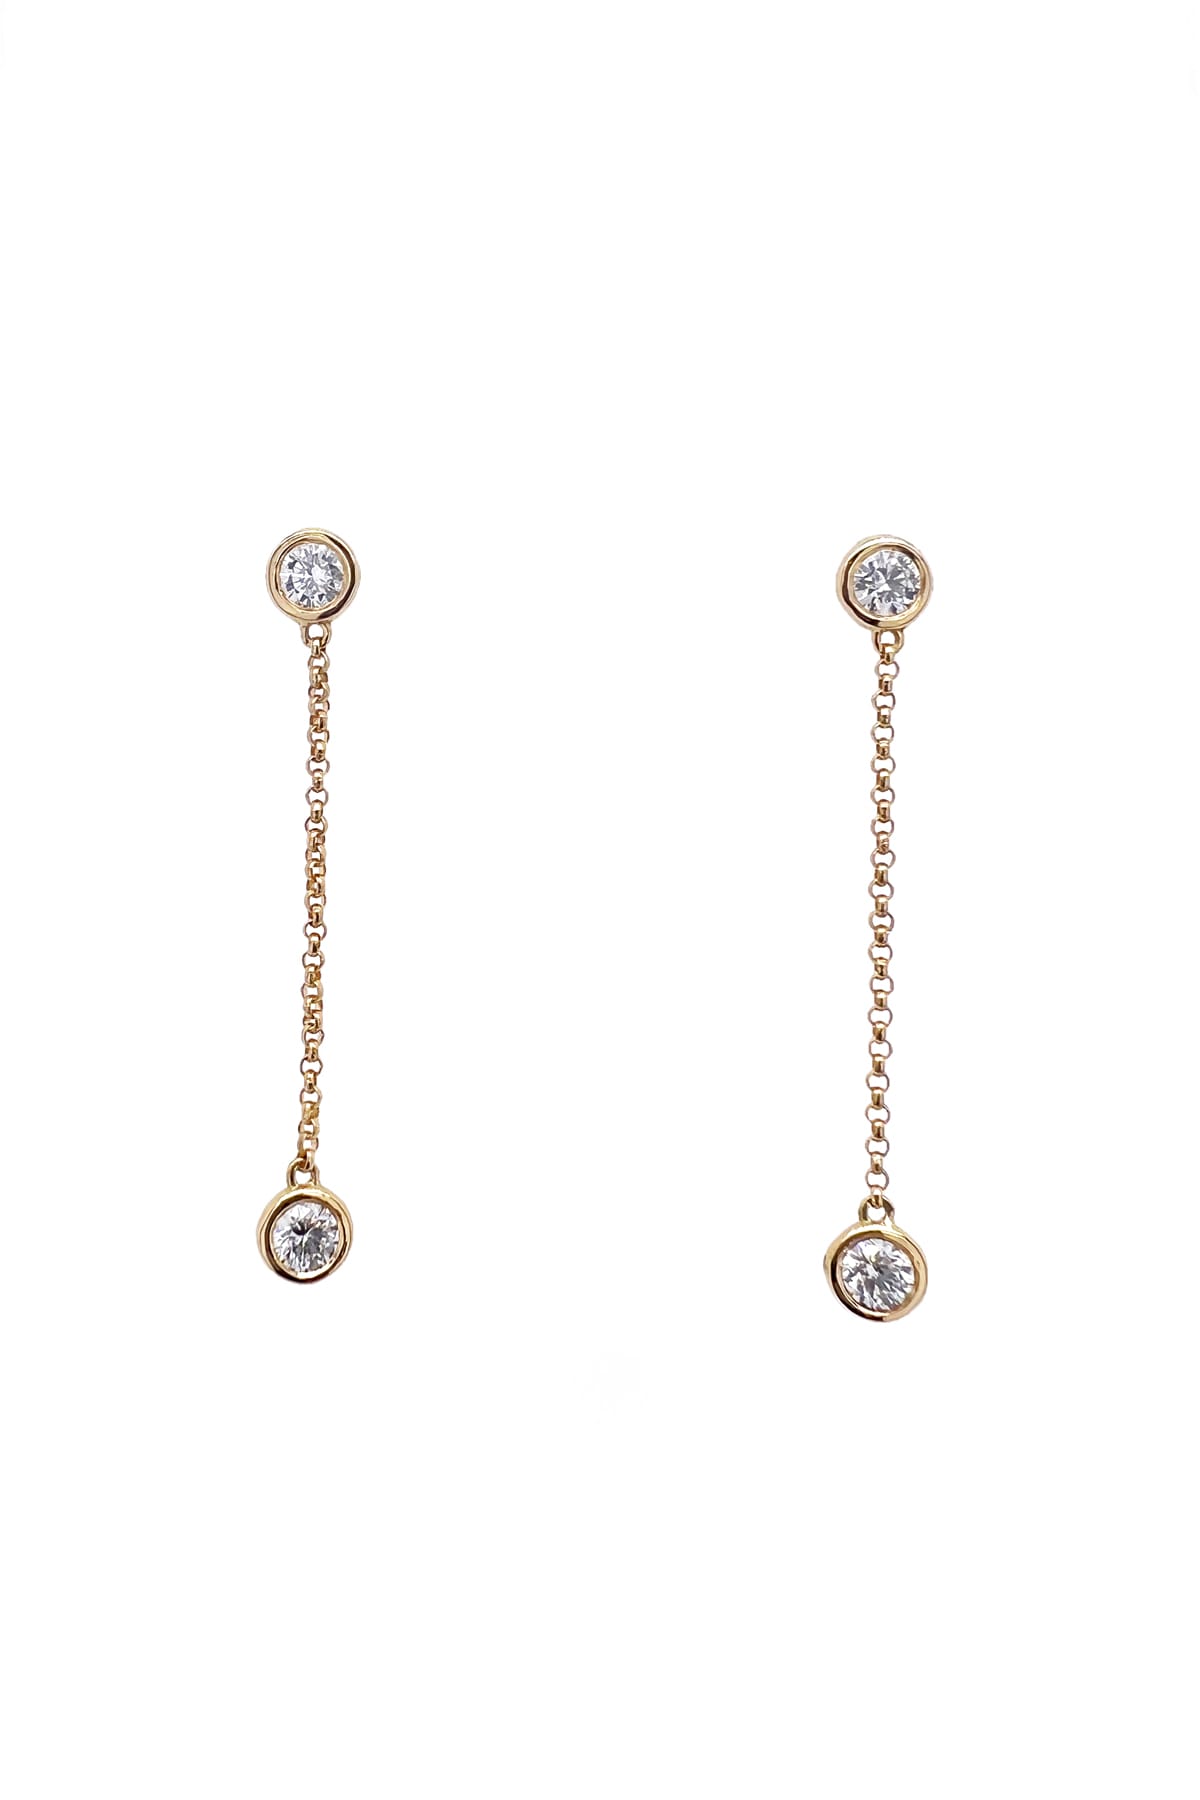 18 Carat Yellow Gold Diamond Long Chain Drop Earrings available at LeGassick Diamonds and Jewellery Gold Coast, Australia.